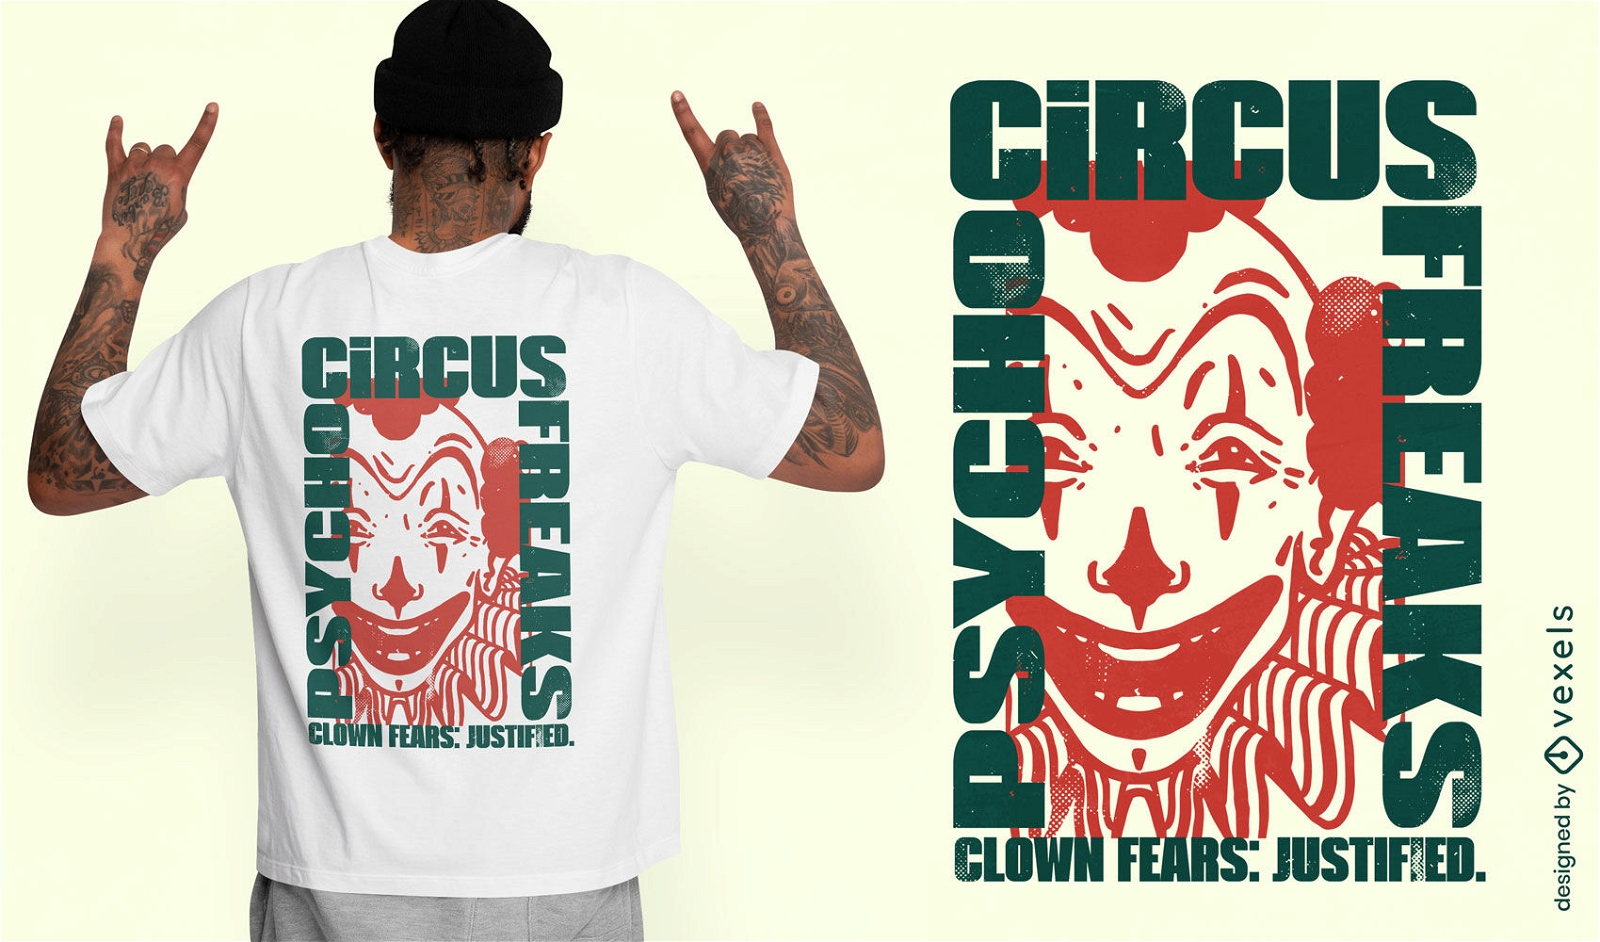 Psycho circus clown t-shirt design